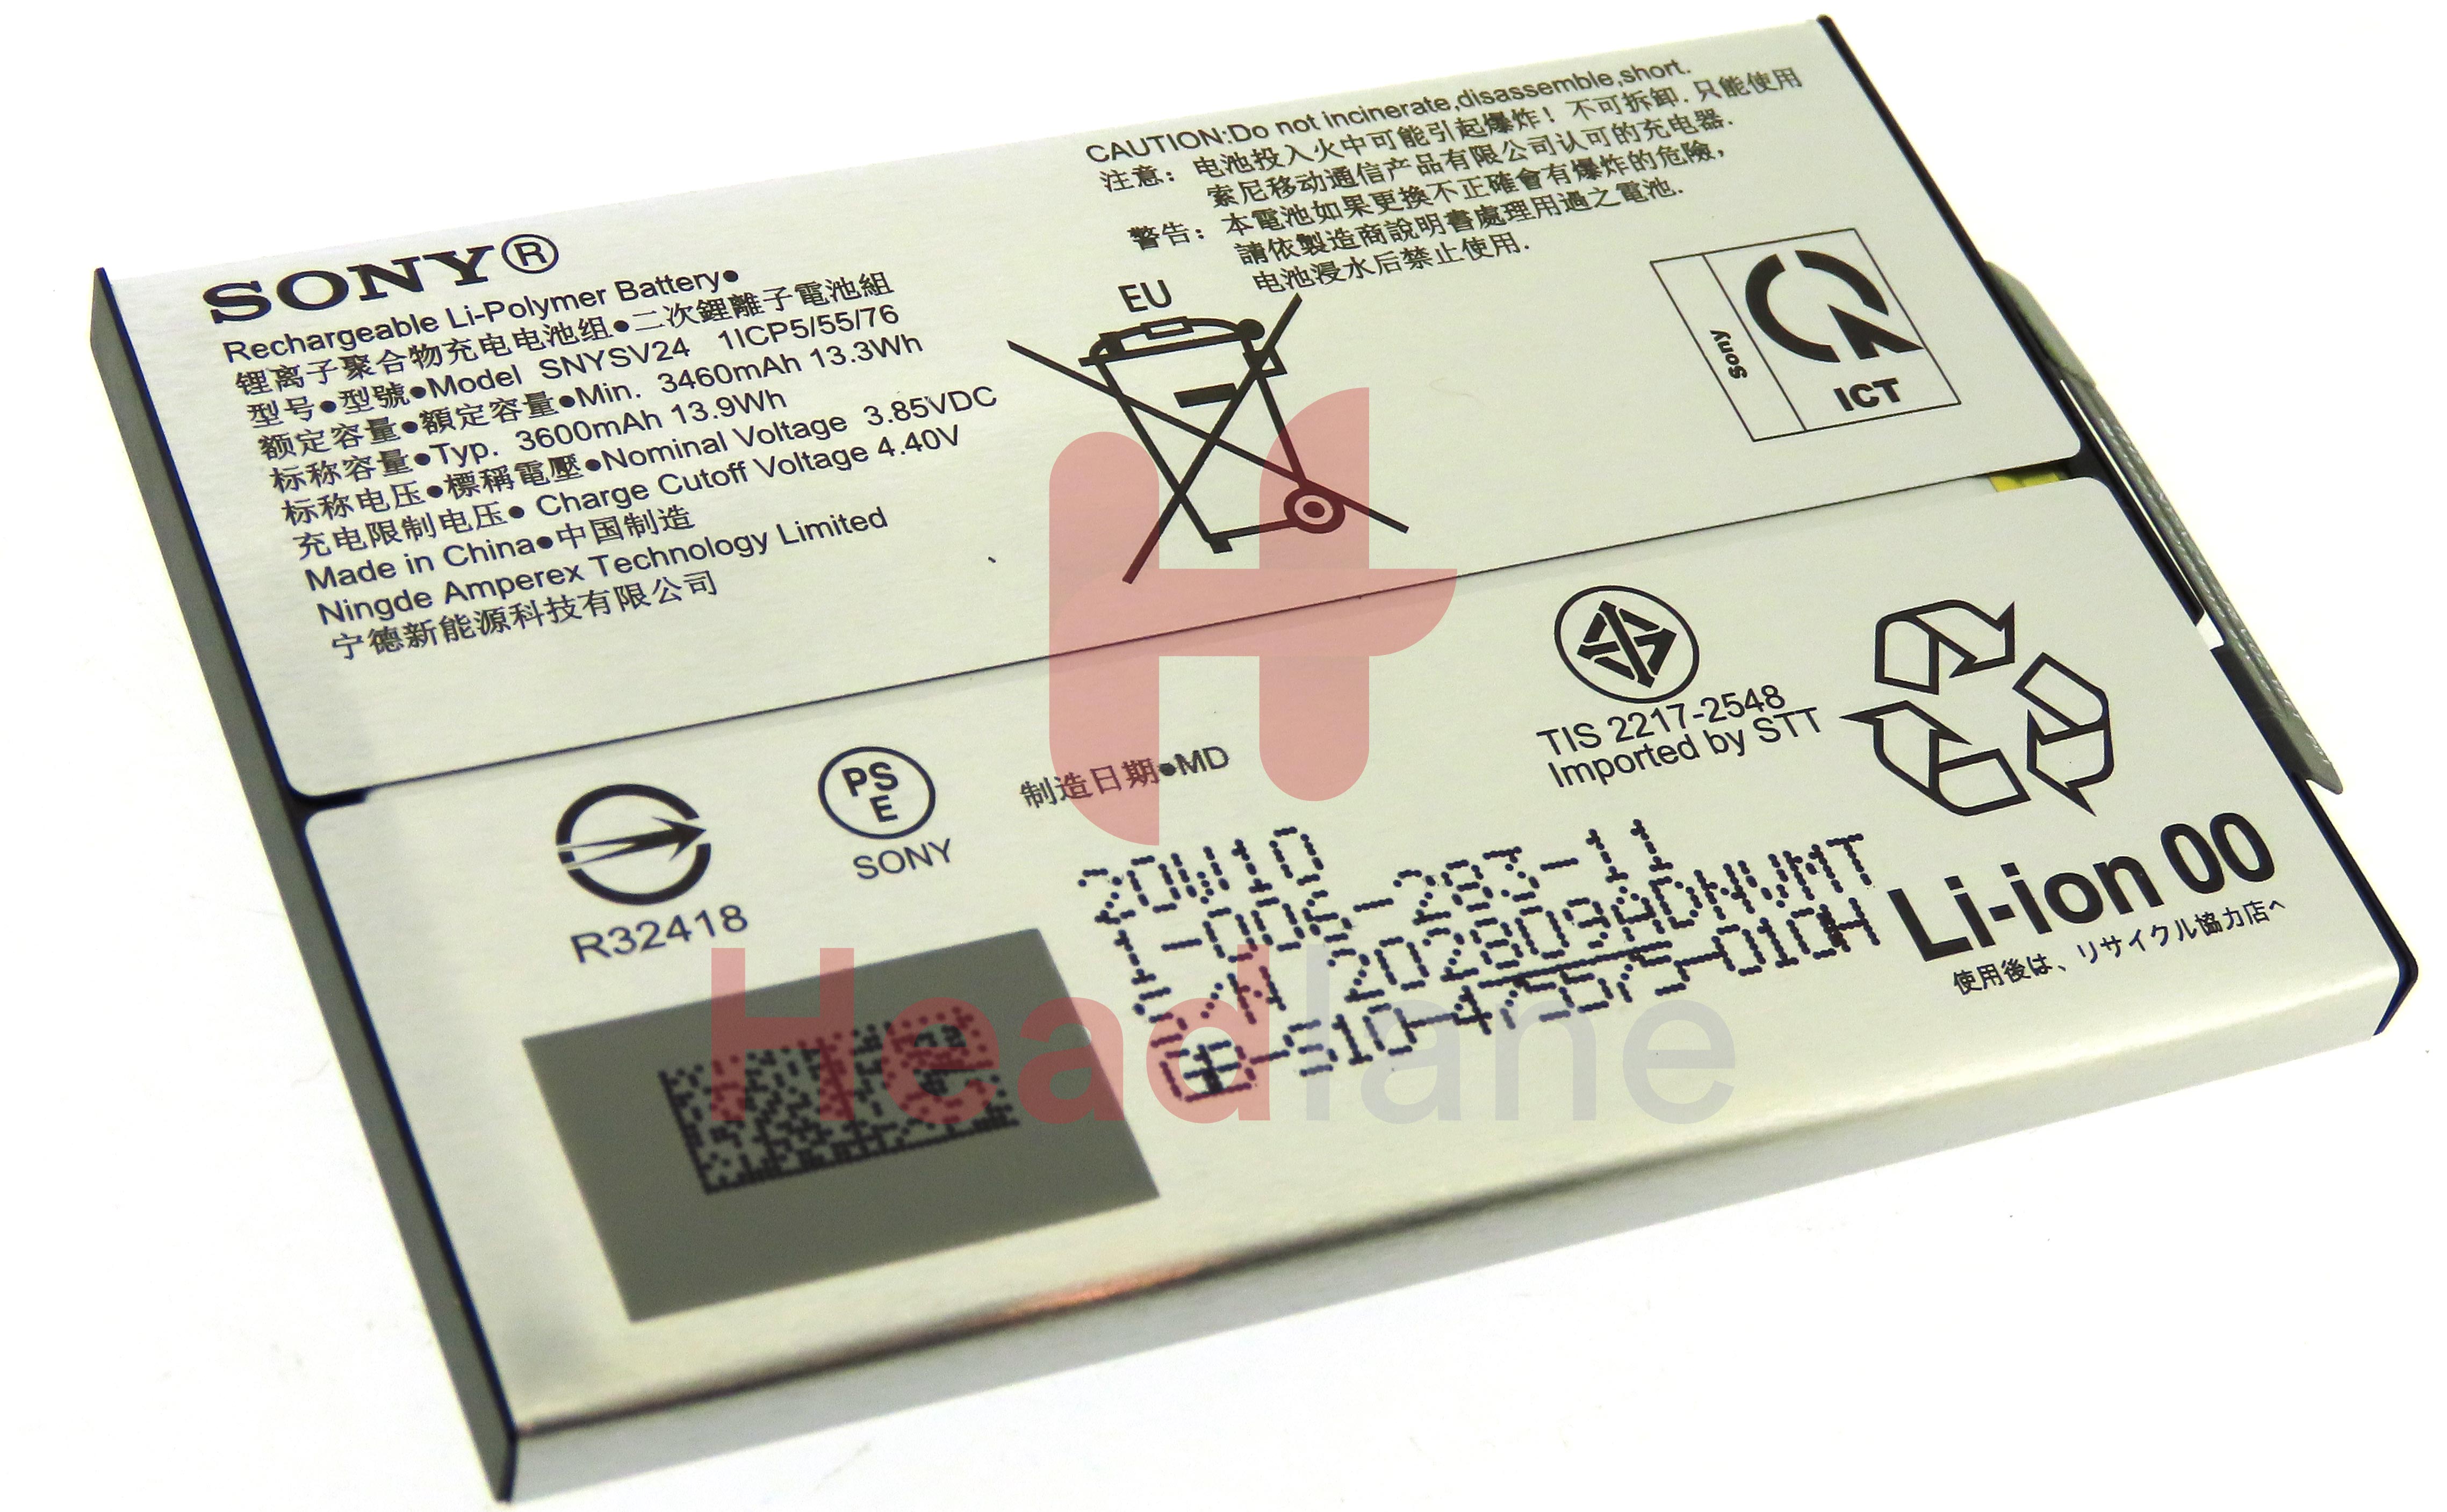 Sony XQ-AU51 / XQ-AU52 Xperia 10 II Battery SNYSV24